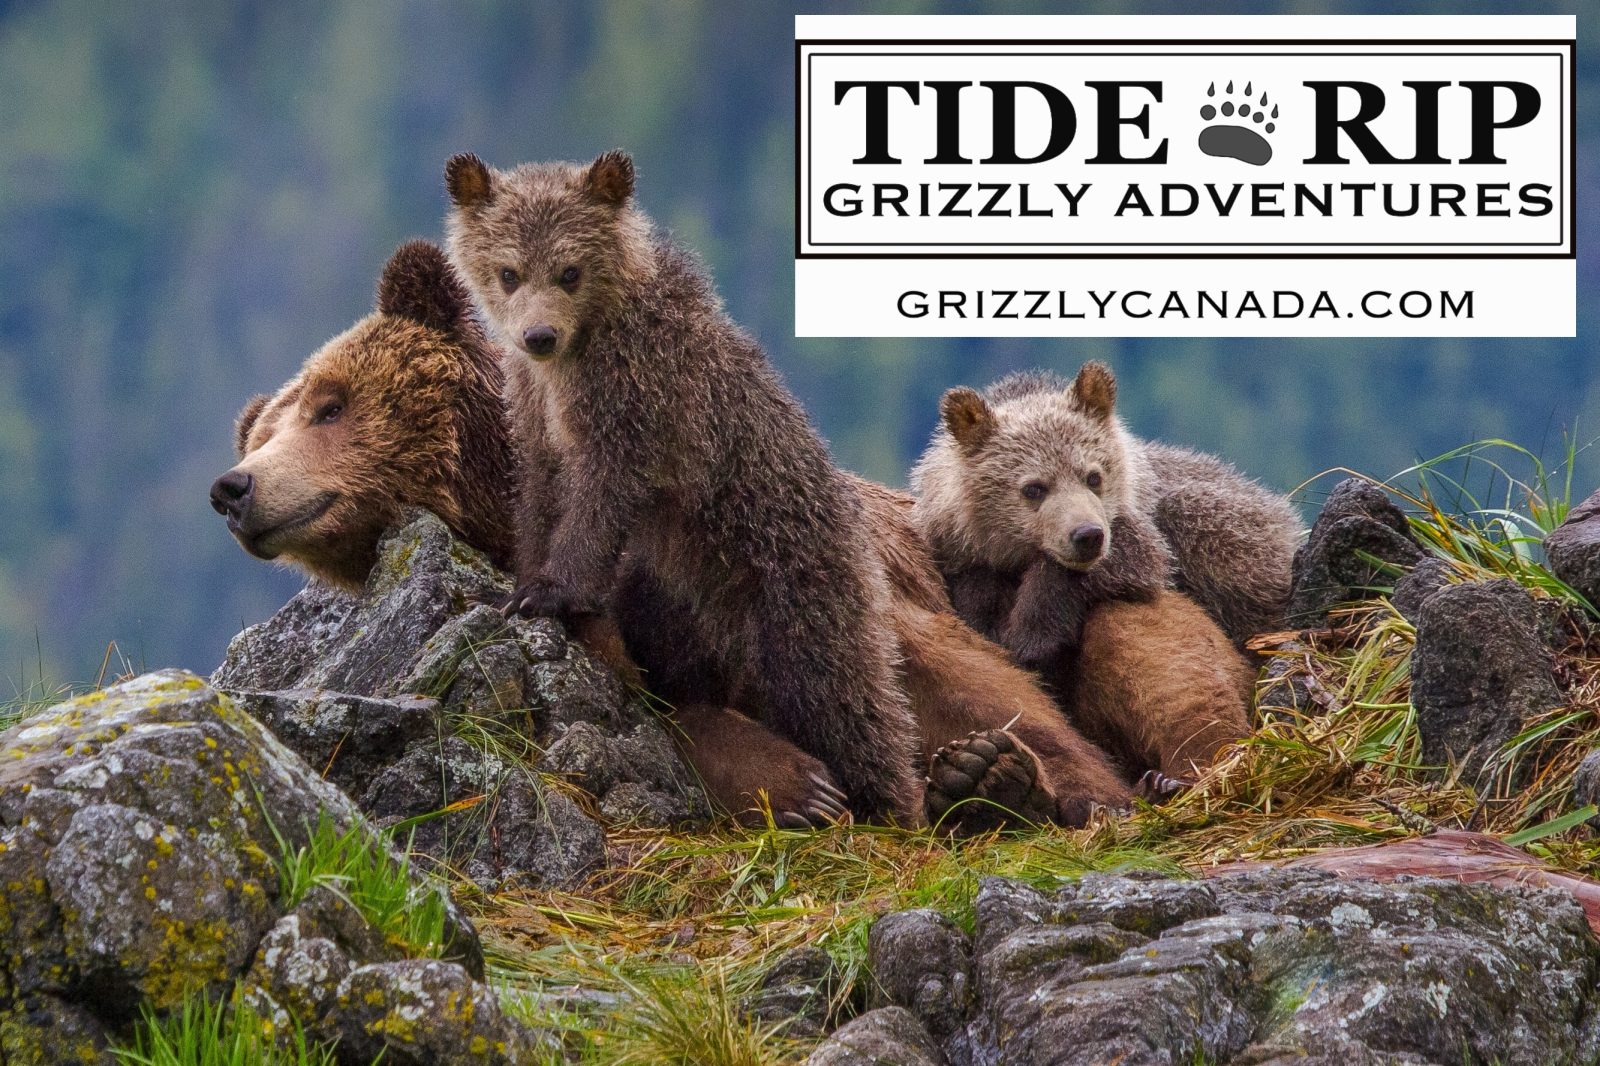 eagle eye adventures grizzly bear tour